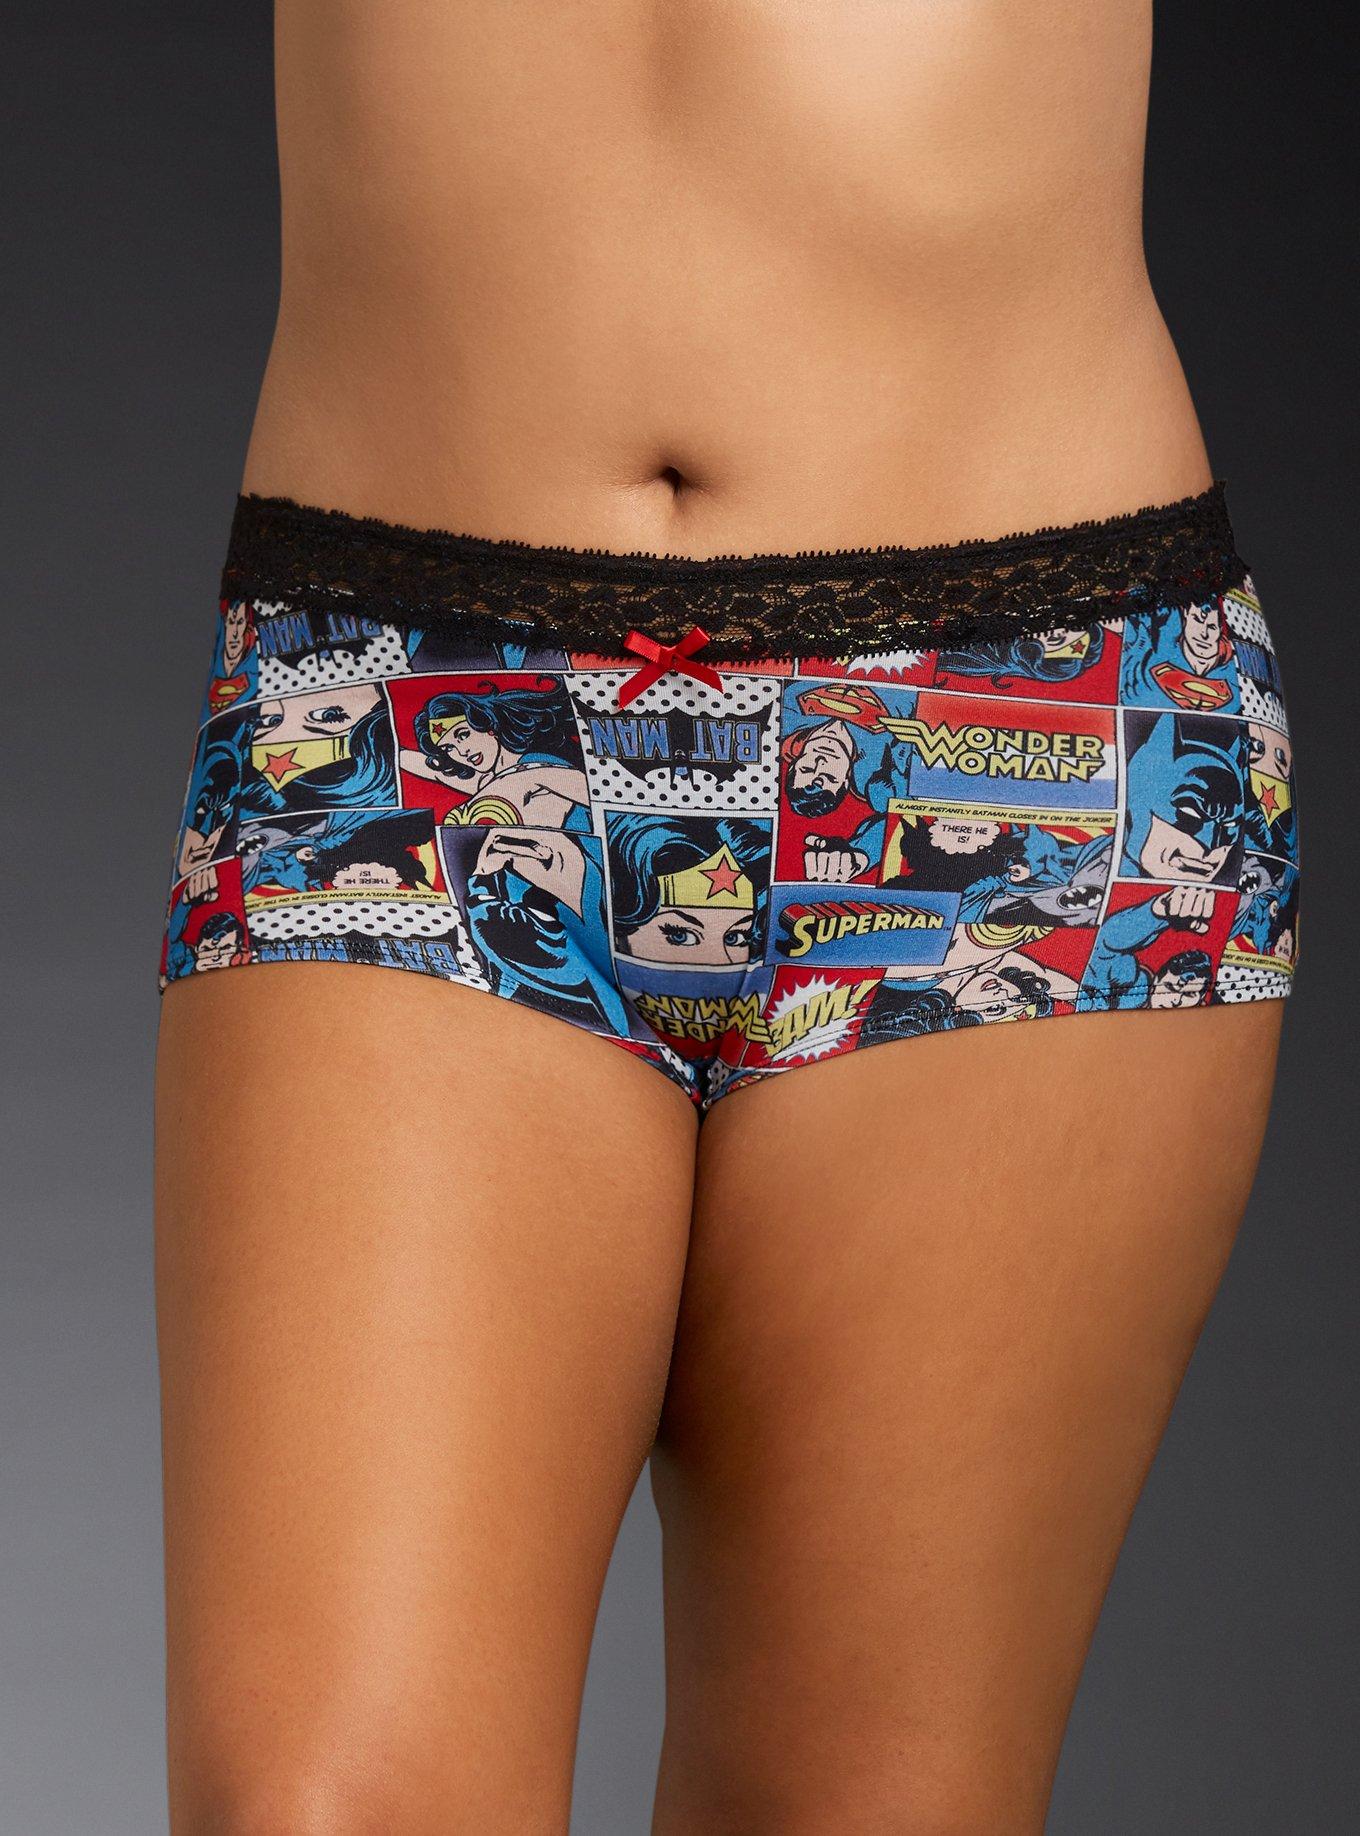 Torrid Thong Panties Underwear Marvel Avengers Comics Heads Plus Size 3 22  / 24